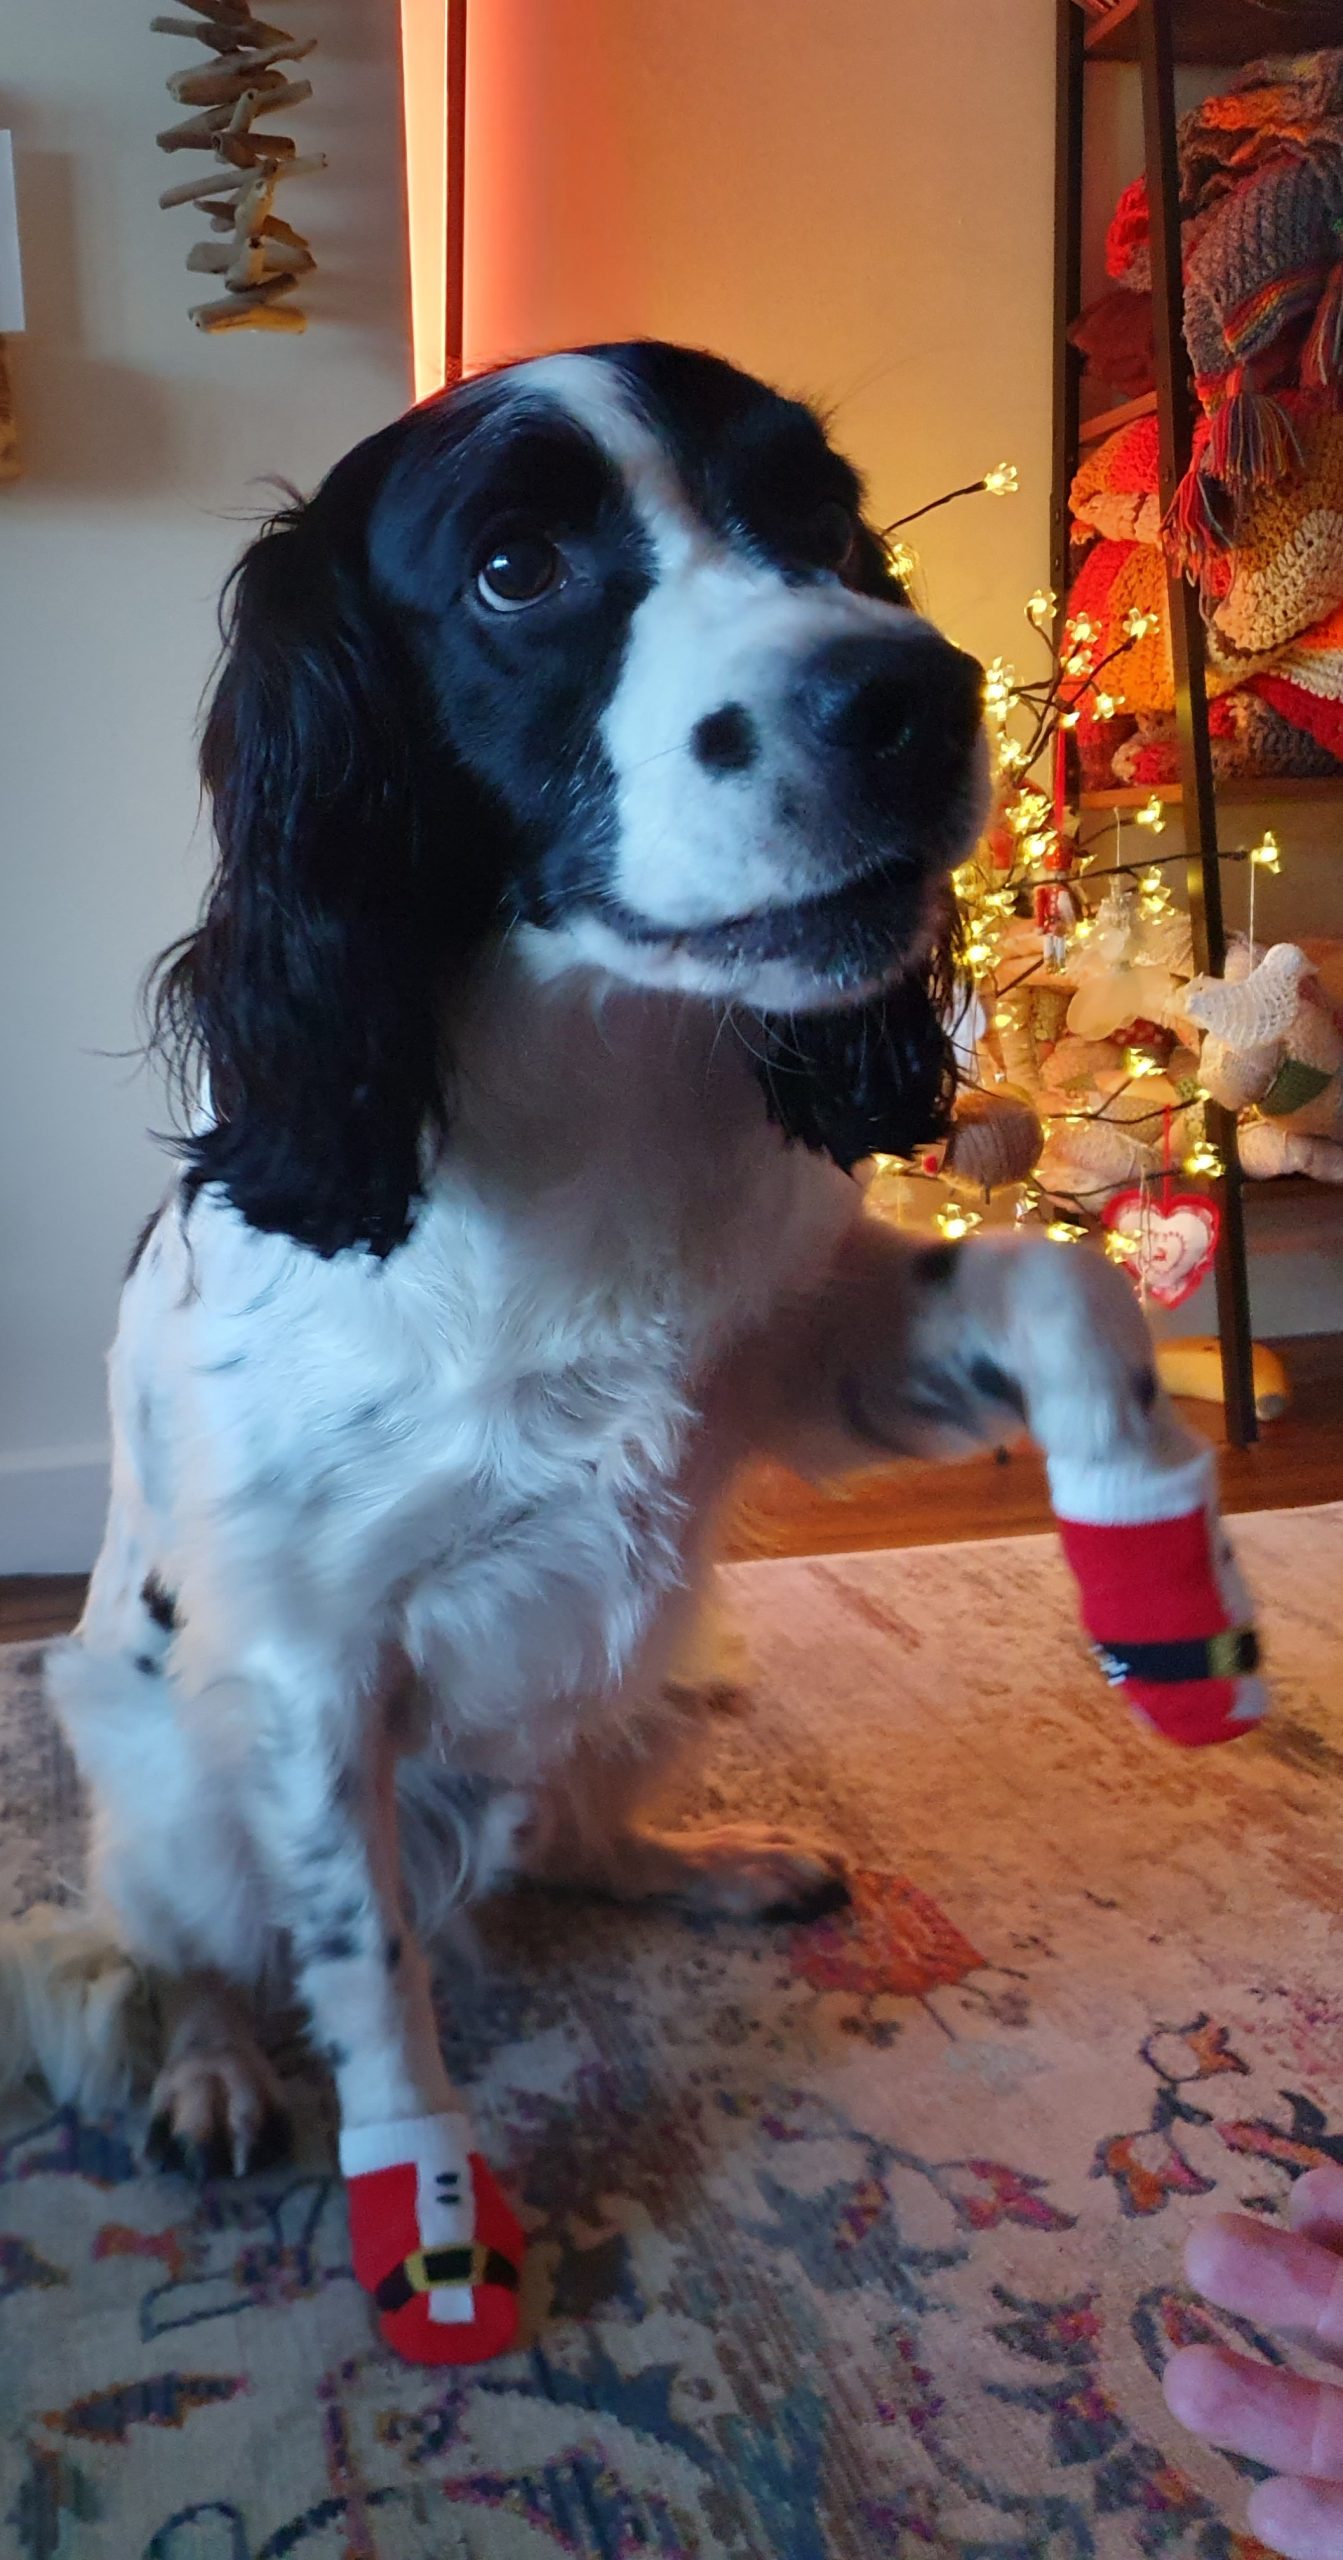 A dog wearing small christmas socks